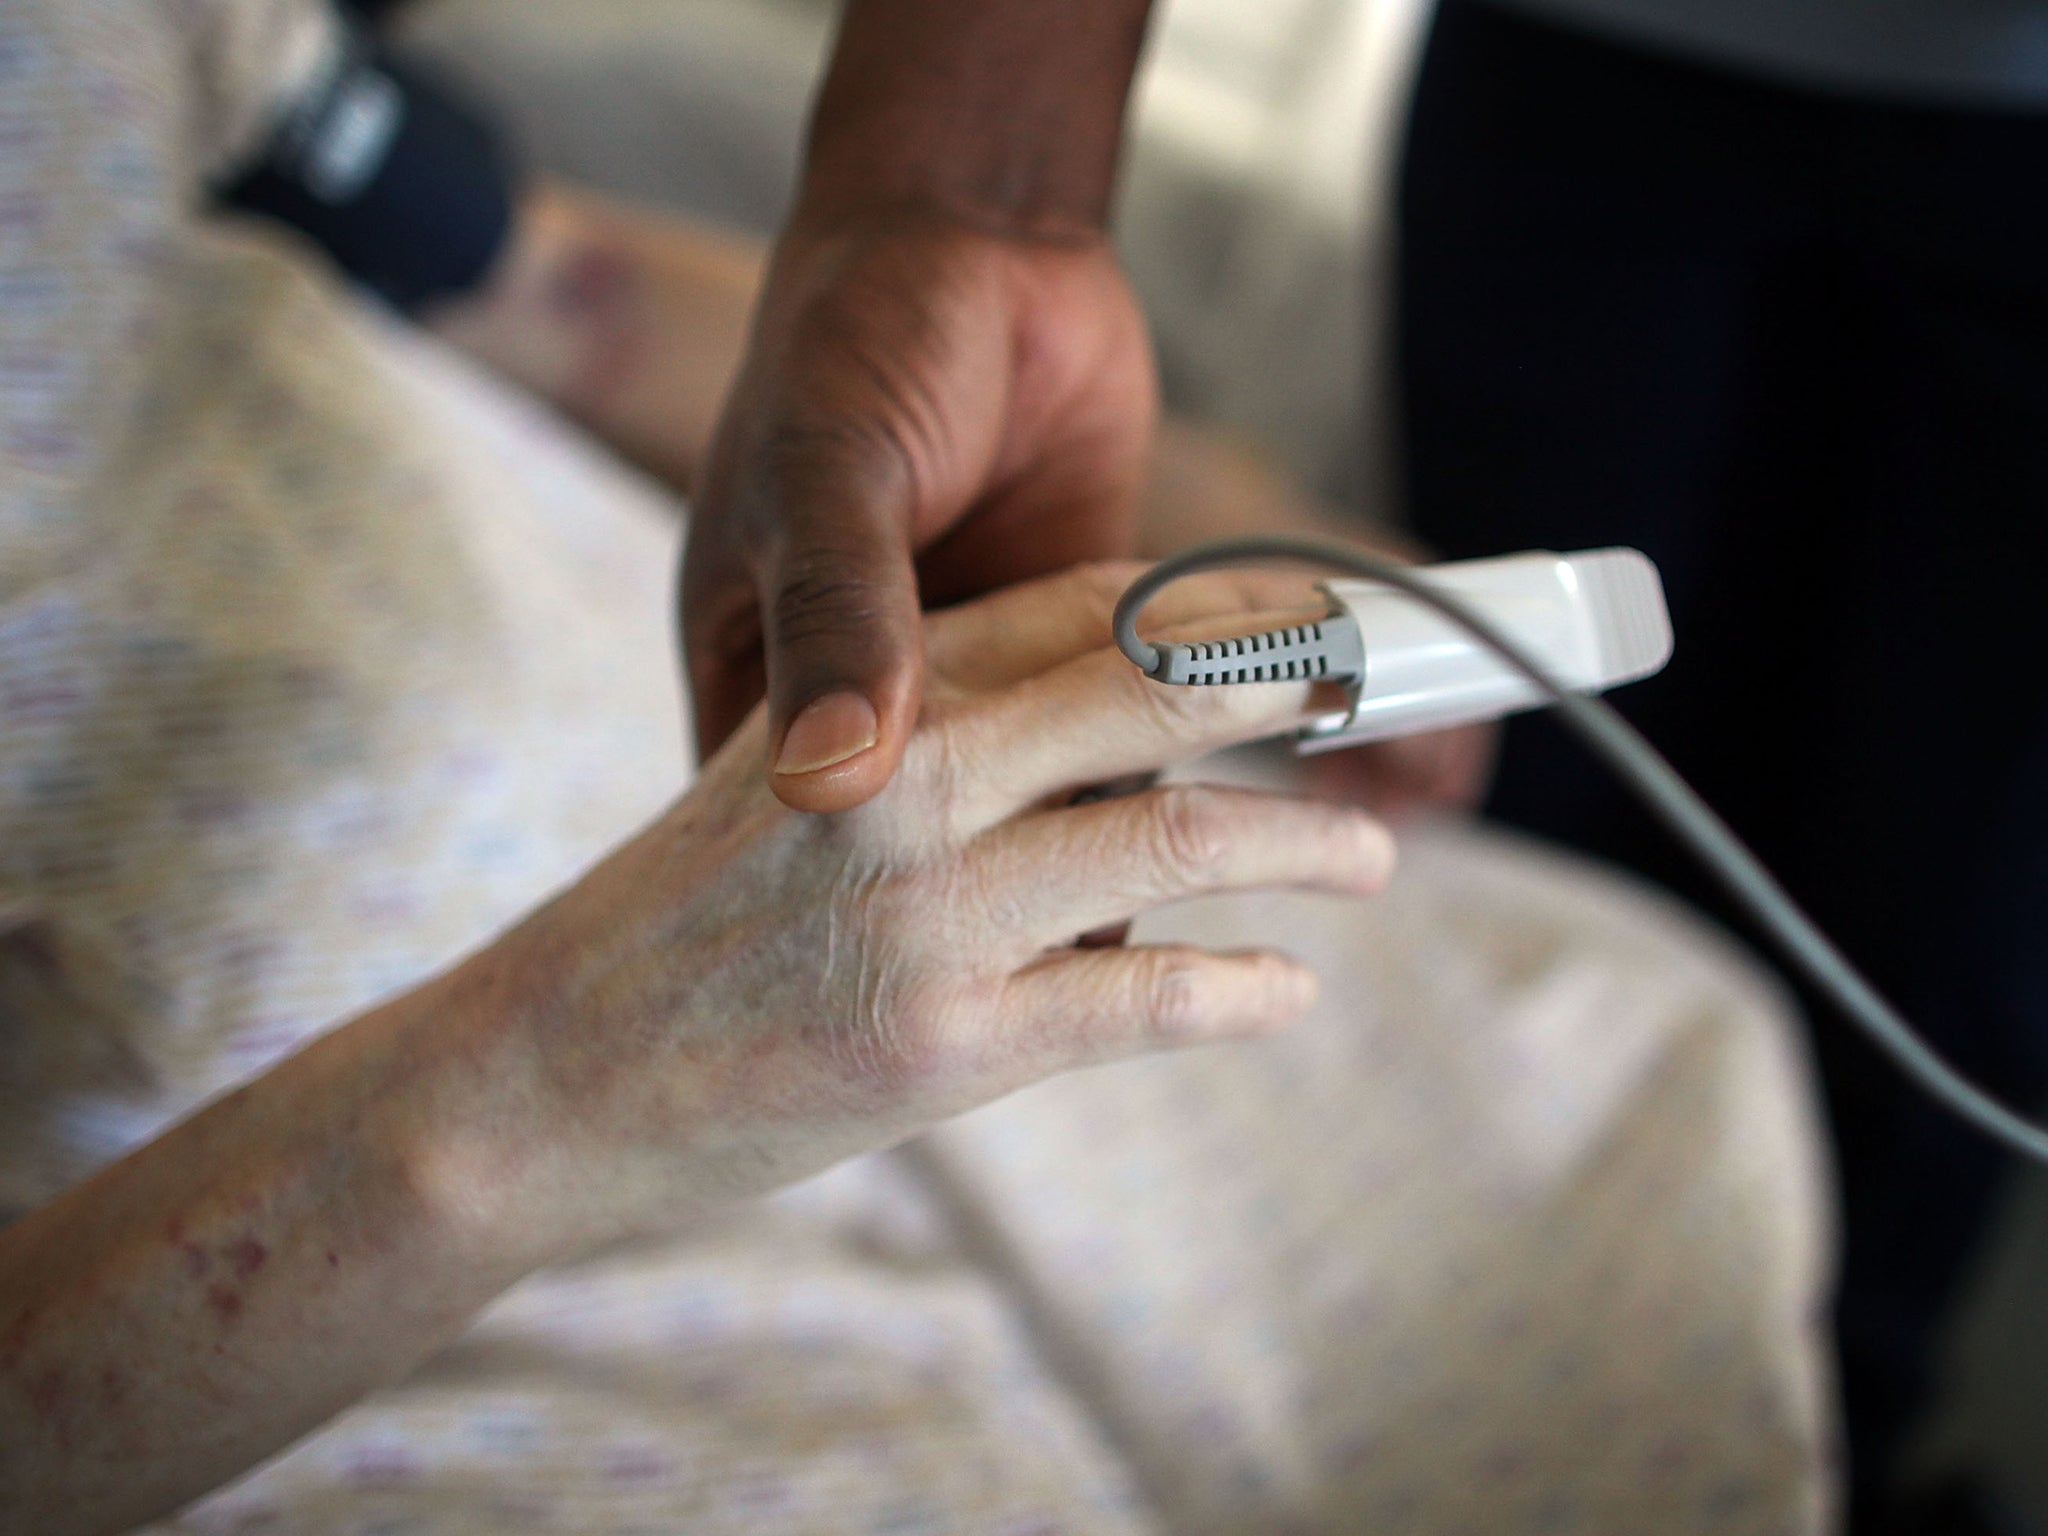 An elderly woman receives treatment in an NHS hospital